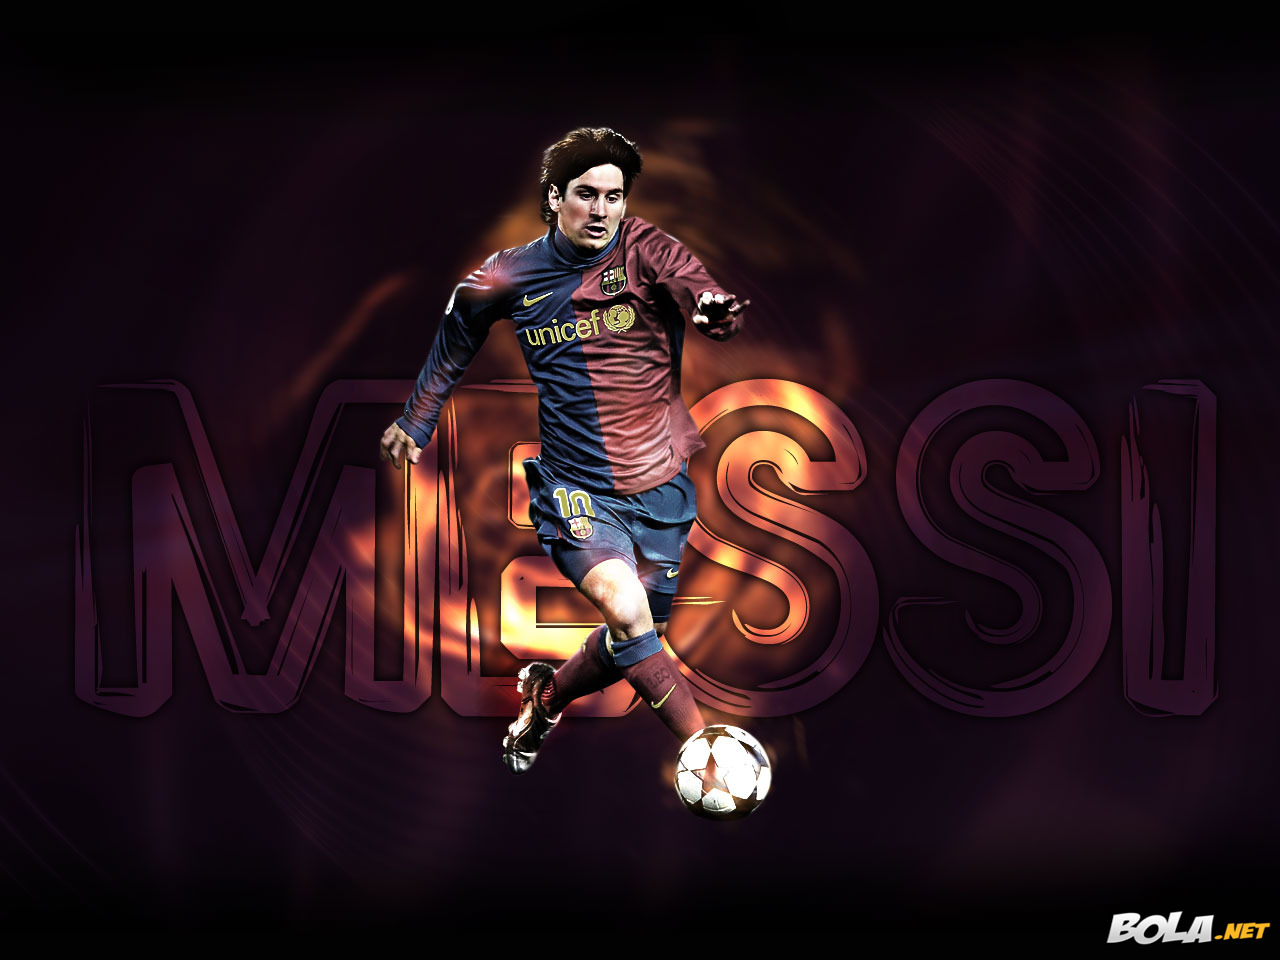 Wallpaper Leonl Mssi Photos Lionel Messi Image